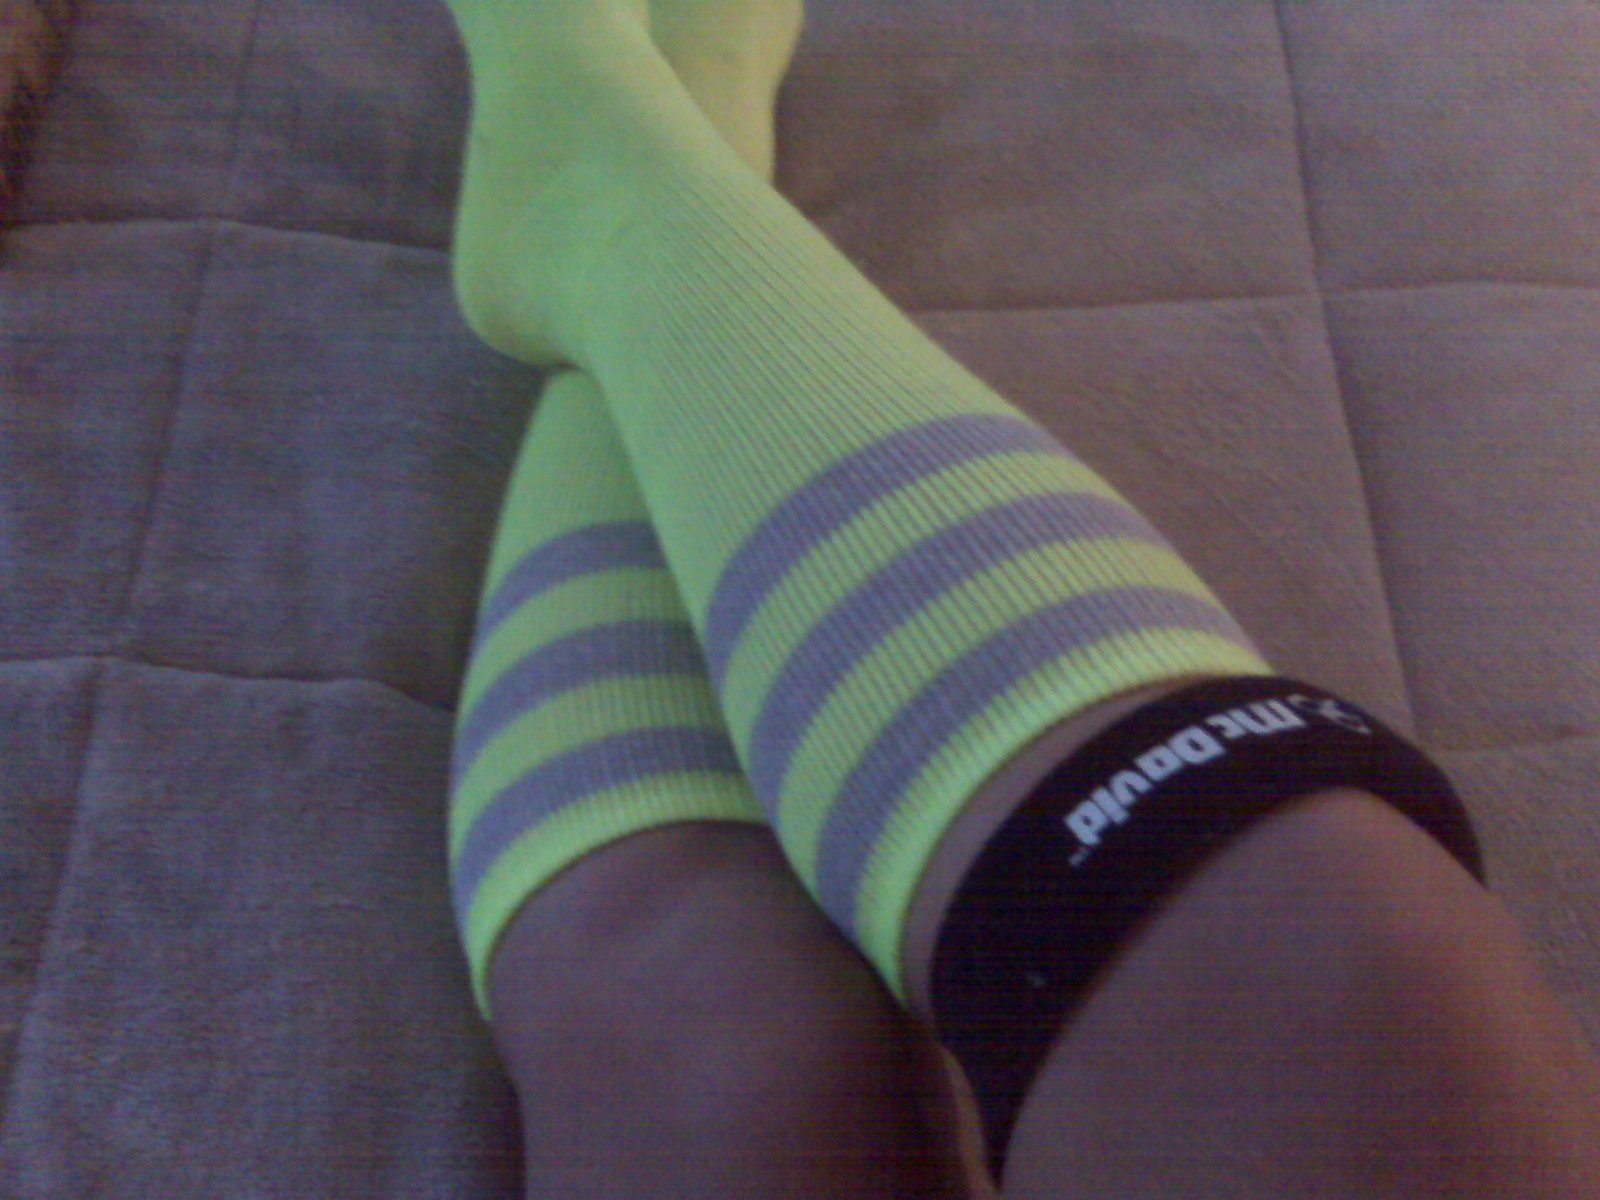 Sock fetish blogspot